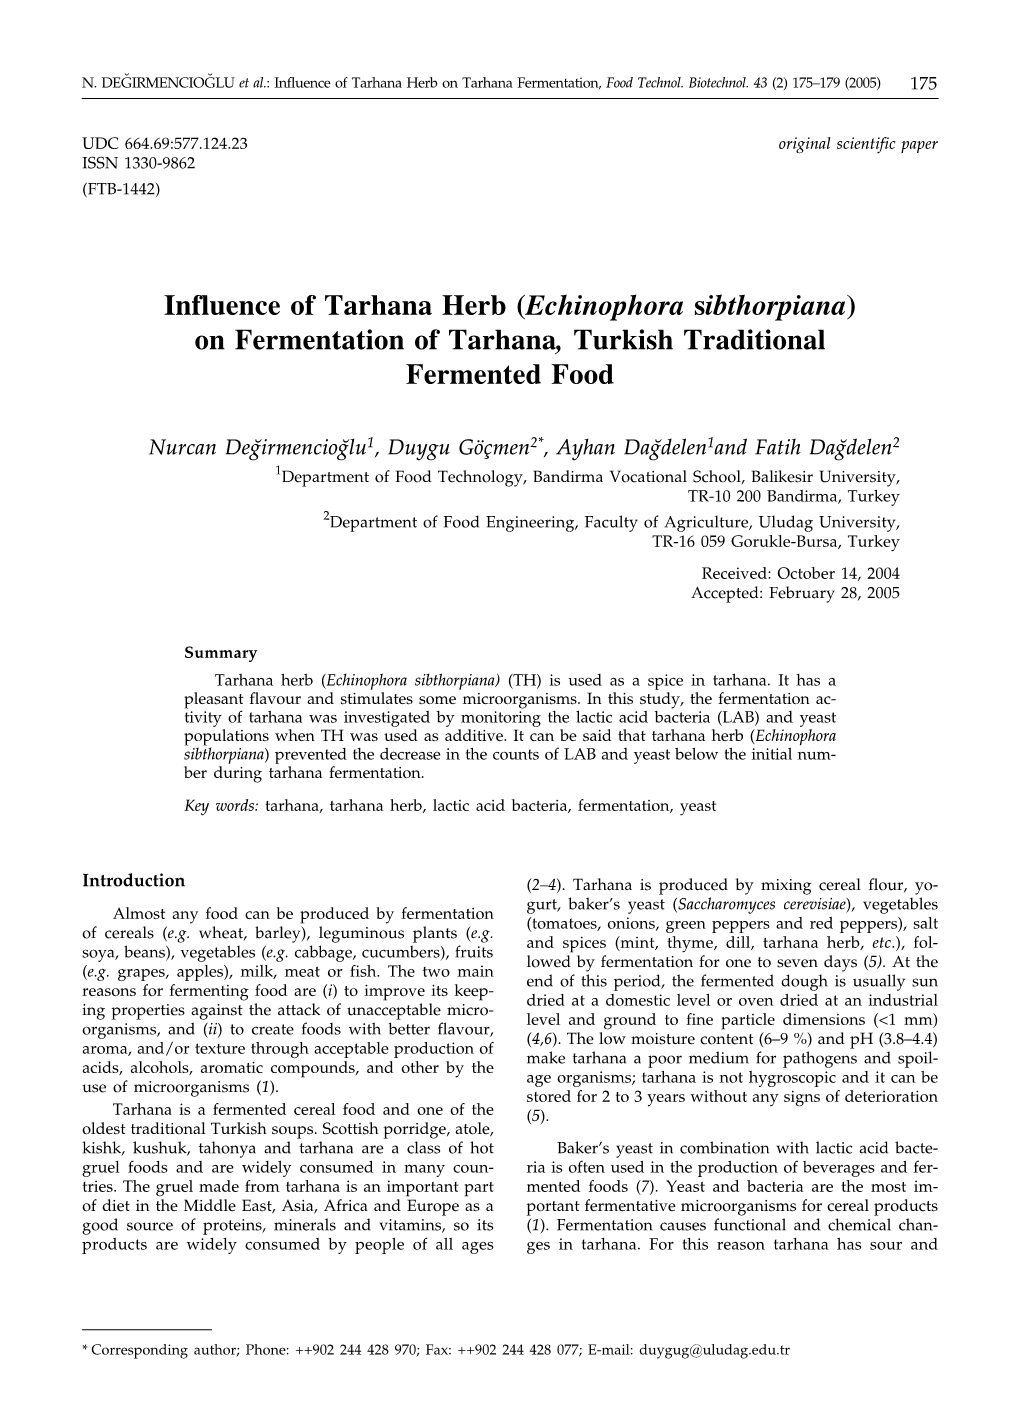 Influence of Tarhana Herb (Echinophora Sibthorpiana) on Fermentation of Tarhana, Turkish Traditional Fermented Food